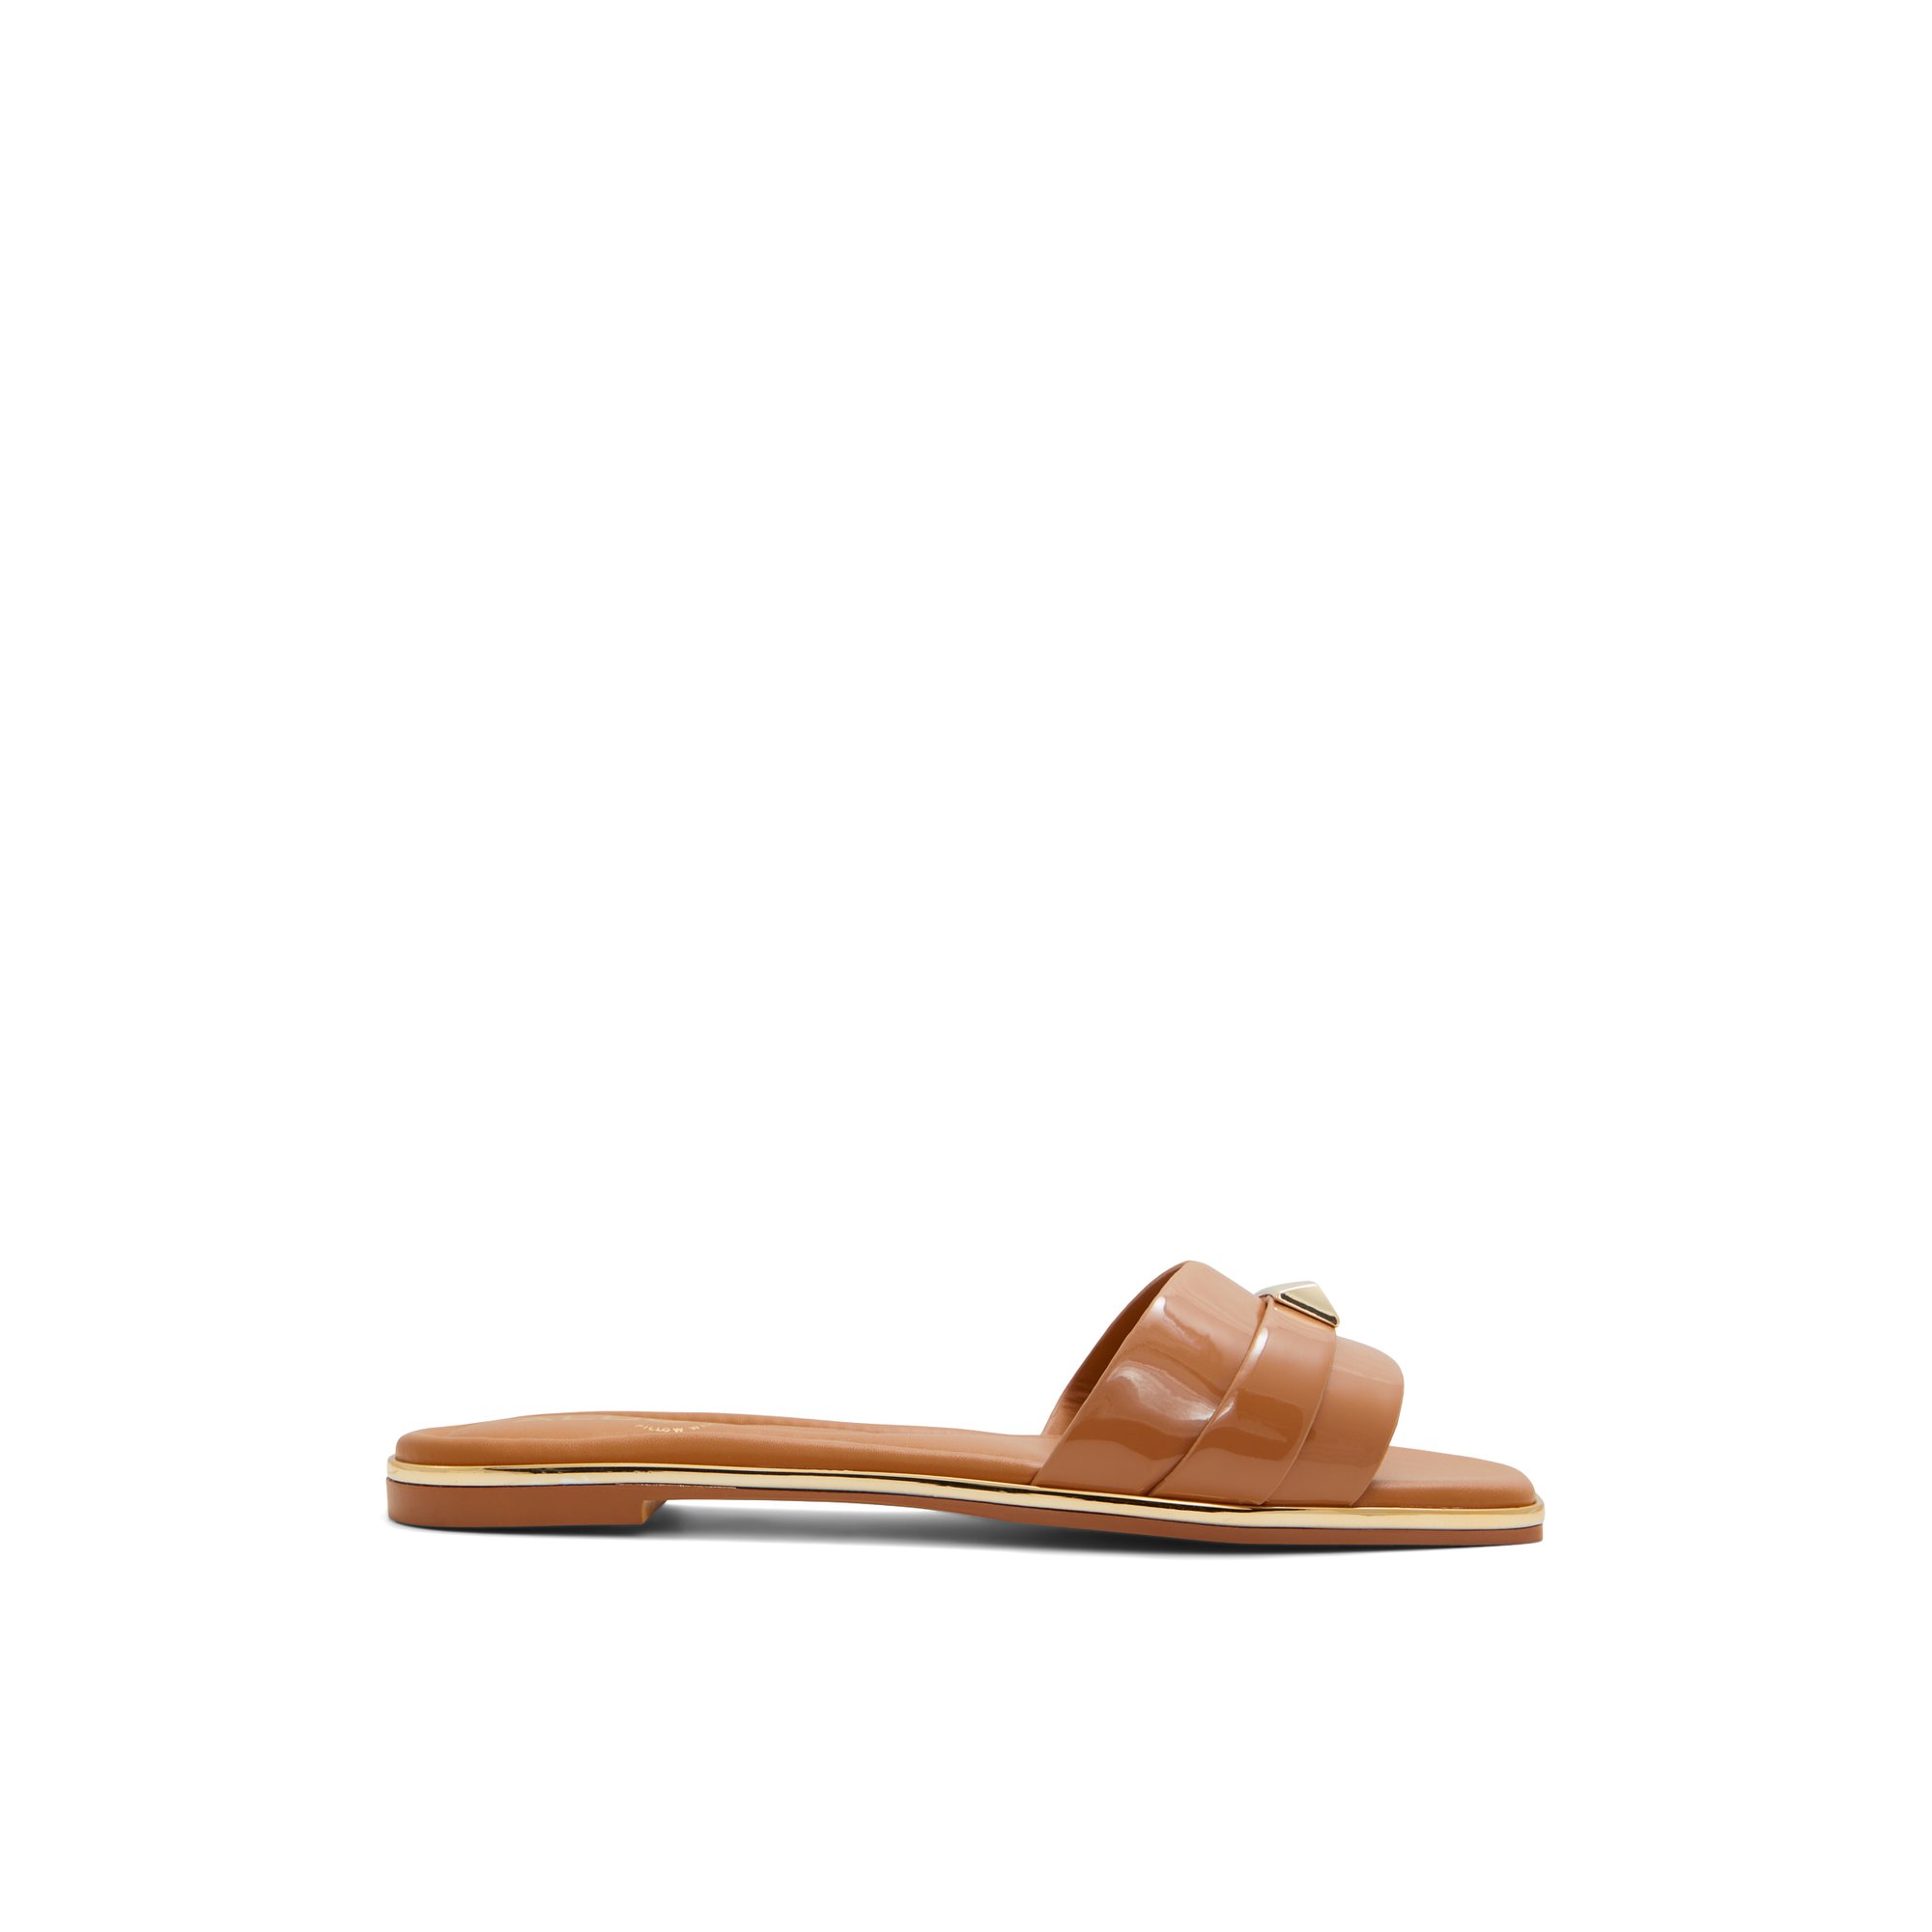 ALDO Darine - Women's Sandals Flats - Beige